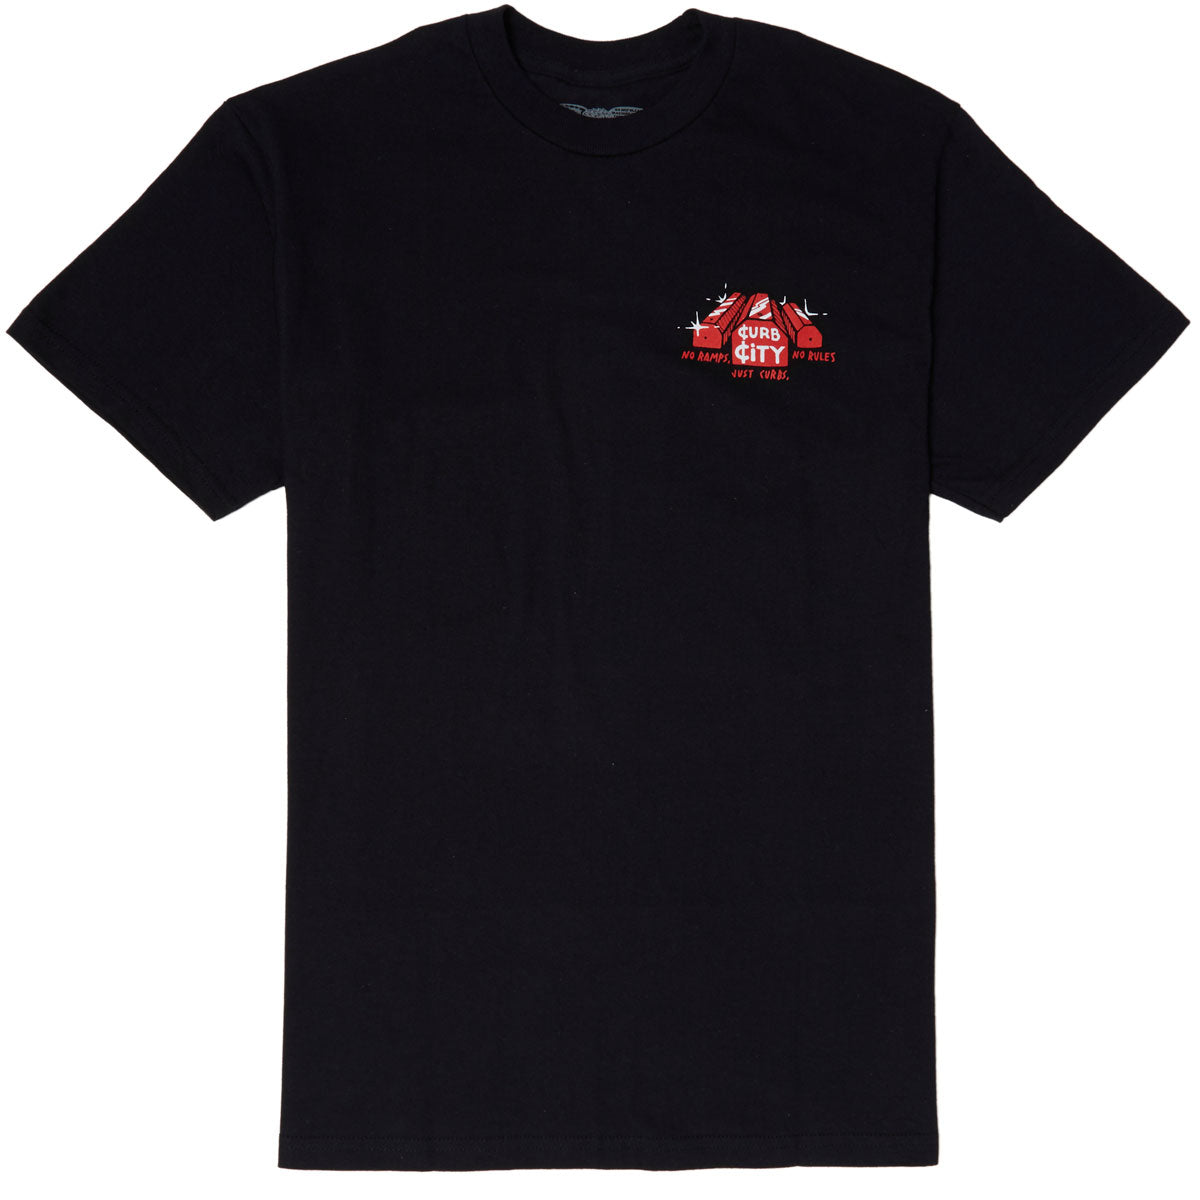 Anti-Hero Curb City T-Shirt - Black/Red image 1